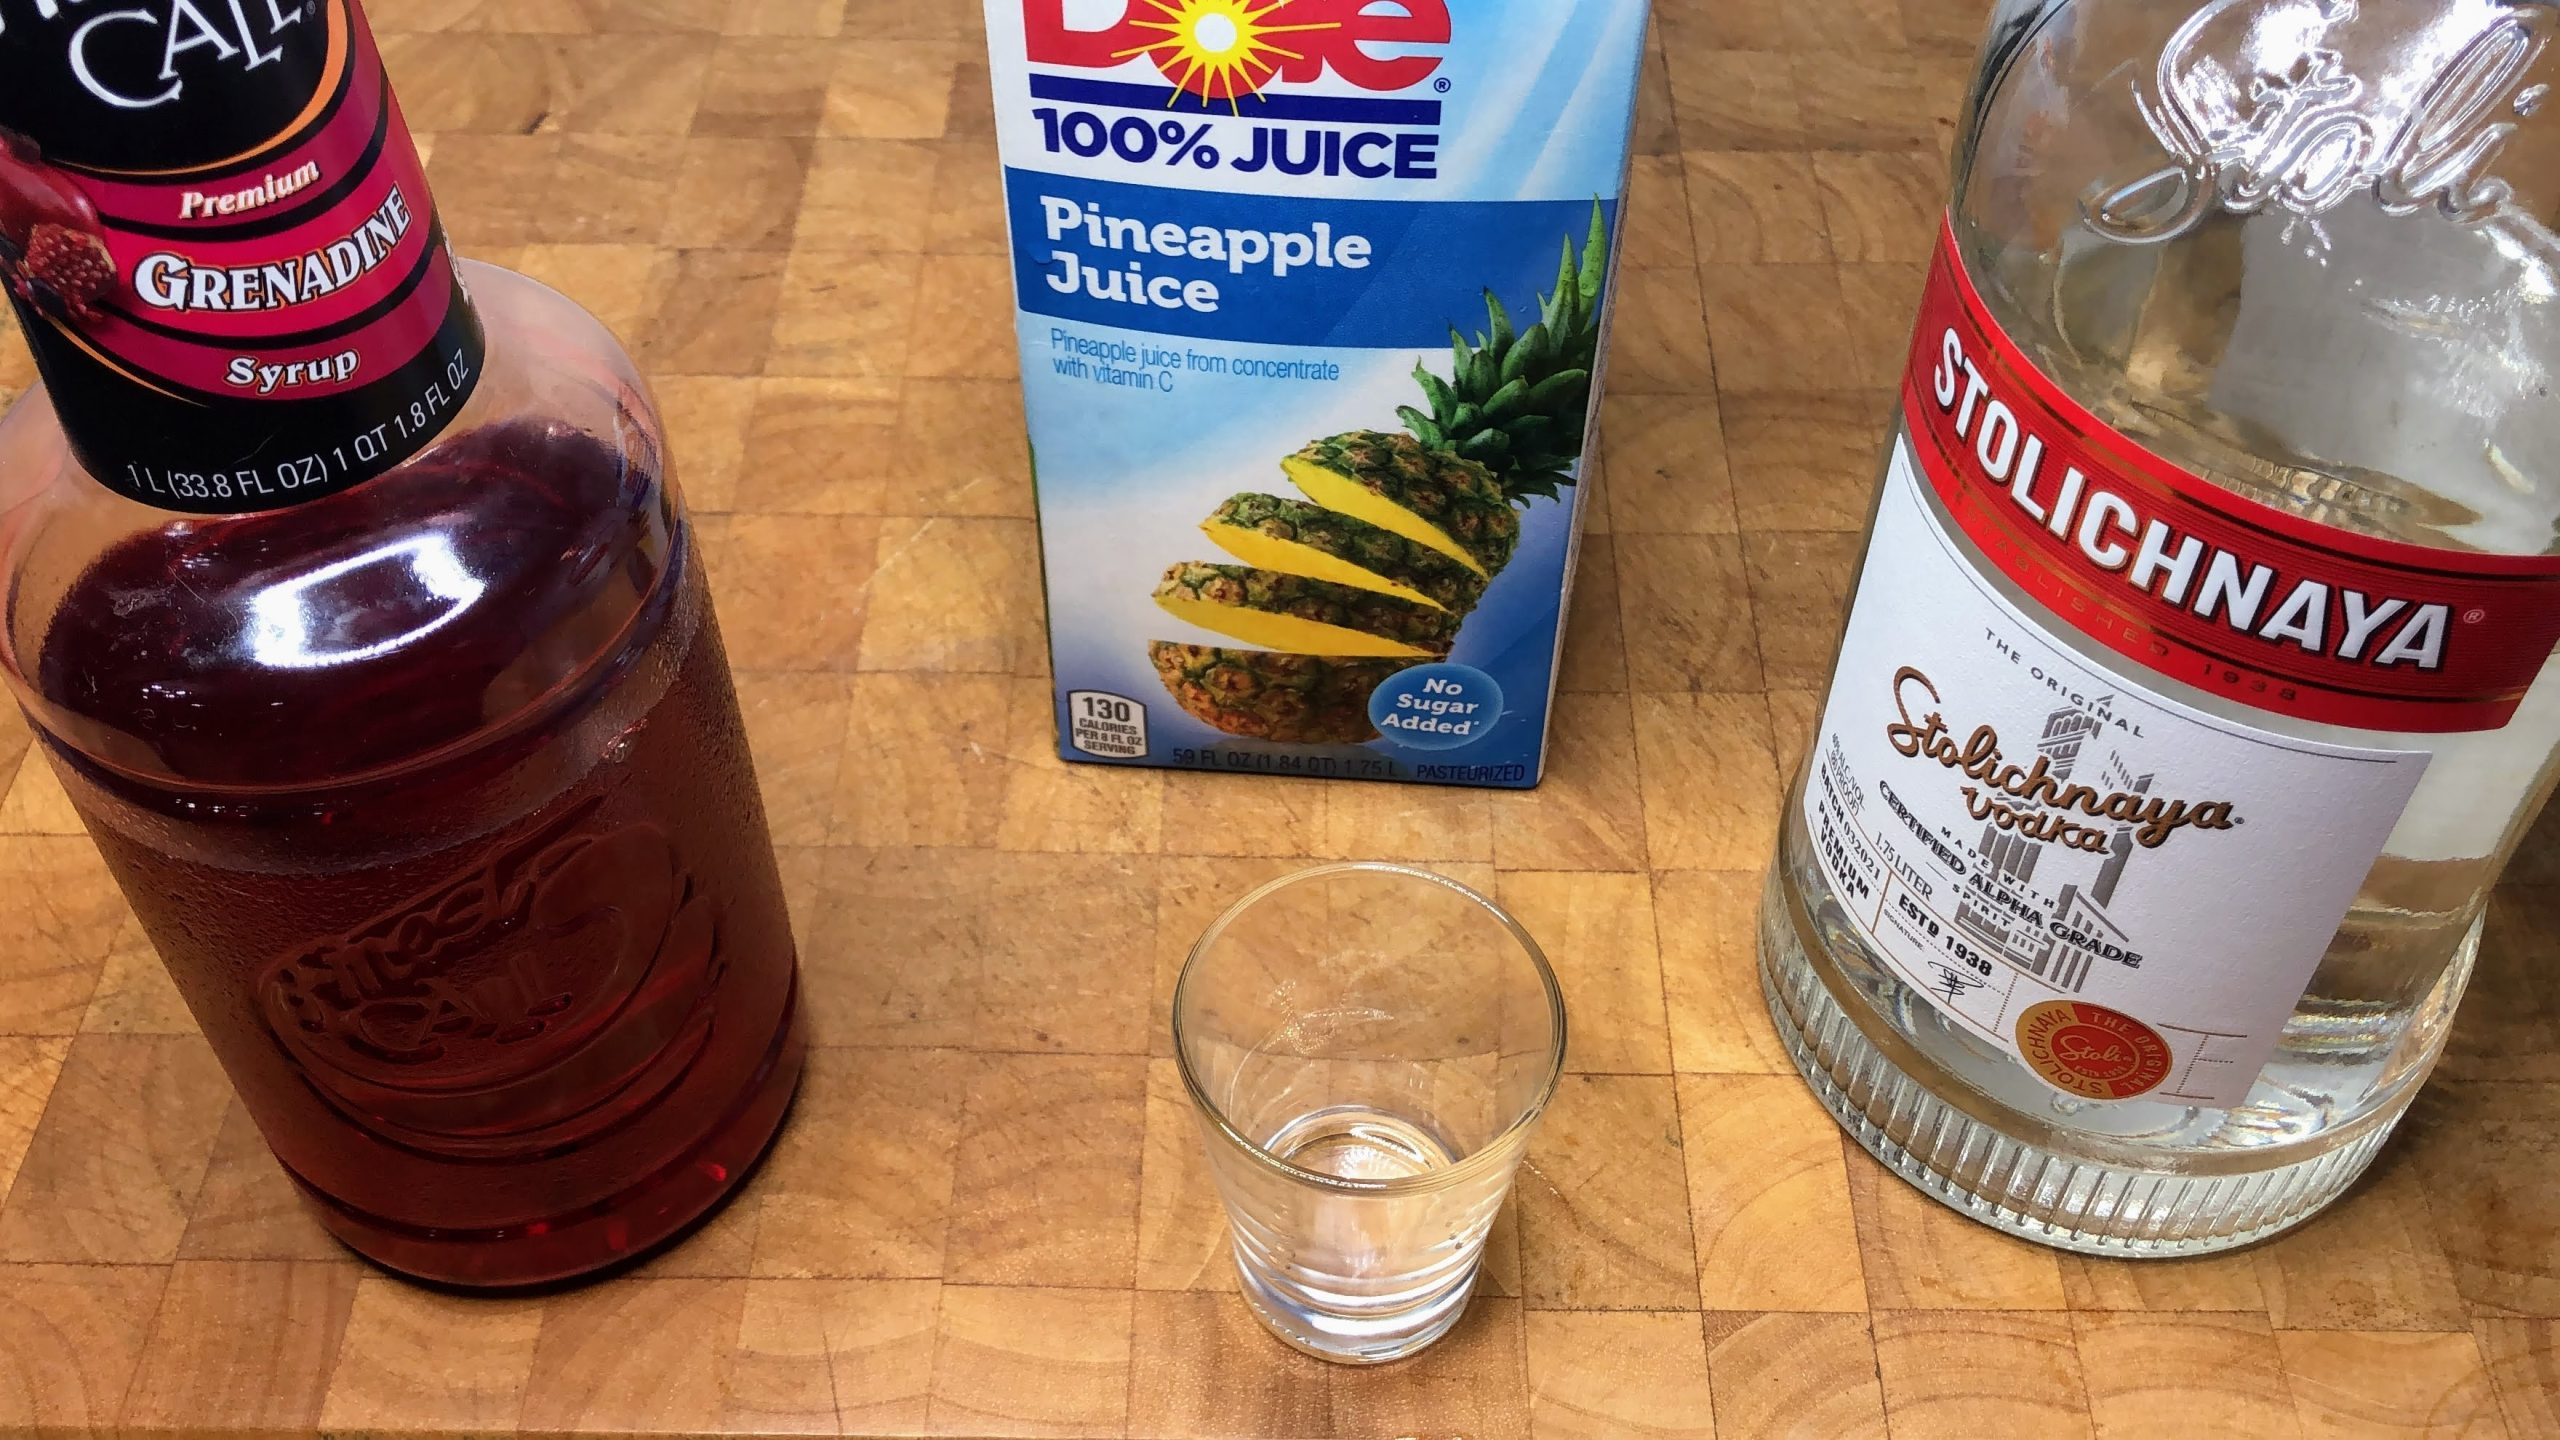 empty shot glass next to bottles of grenadine, bodka and pineapple juice